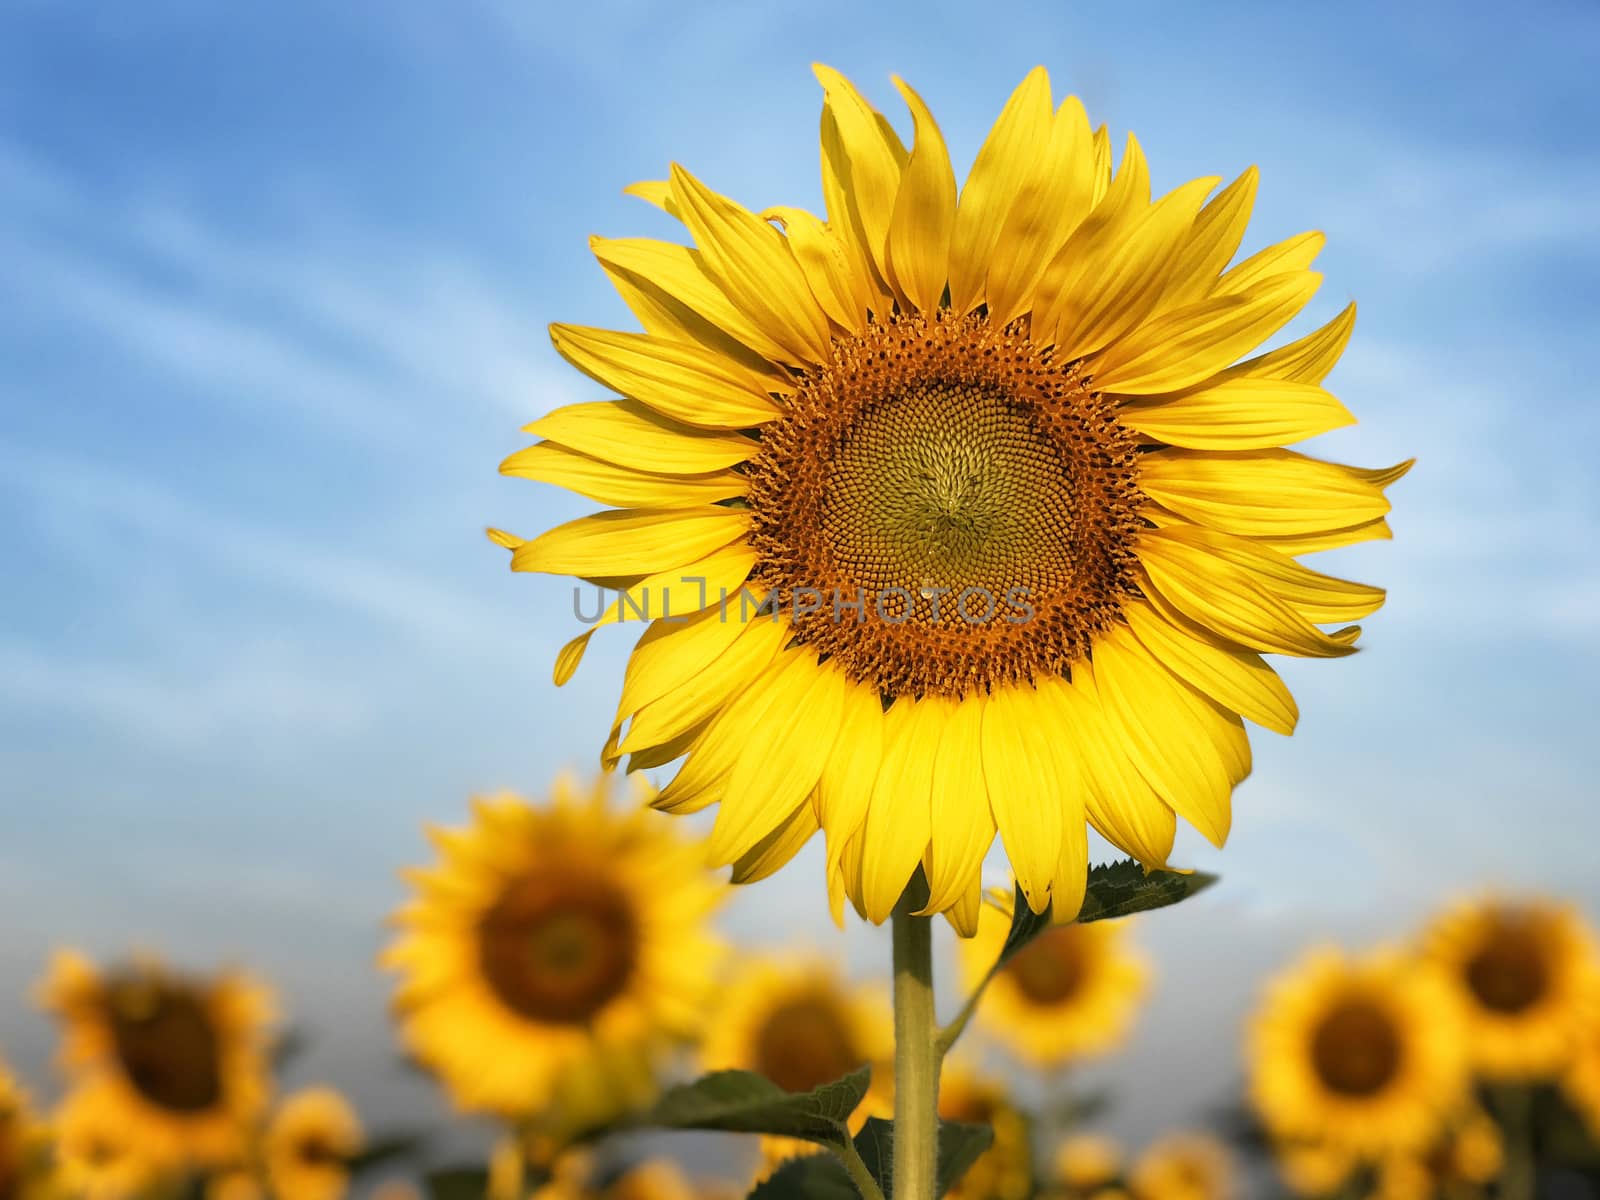 Big sunflower in the field and blue sky in sunrise by Surasak